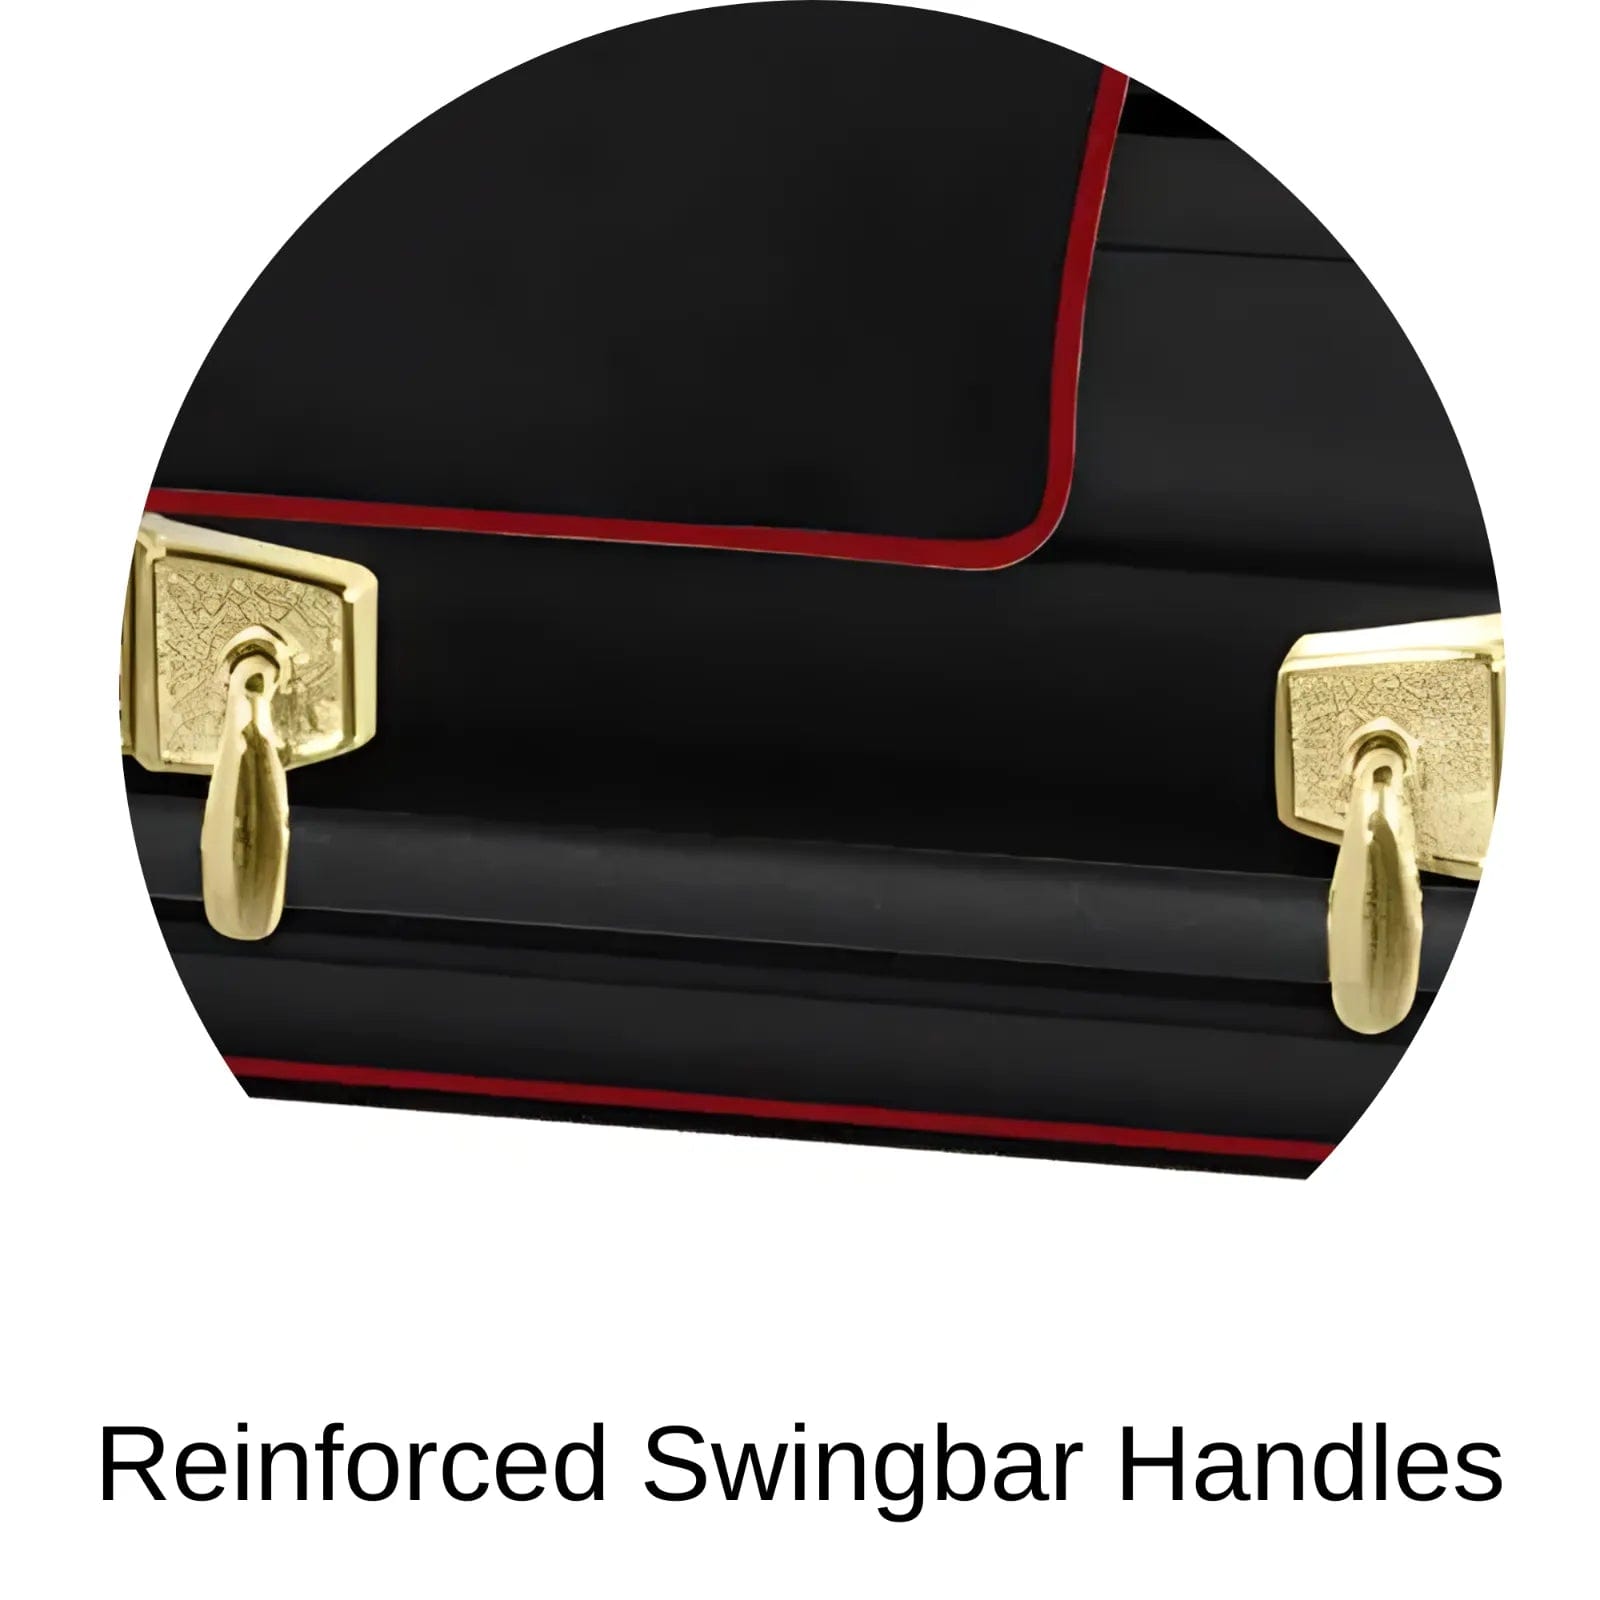 Reinforced Swingbar handles Veteran Select Titan Casket Marines Black Steel Casket 